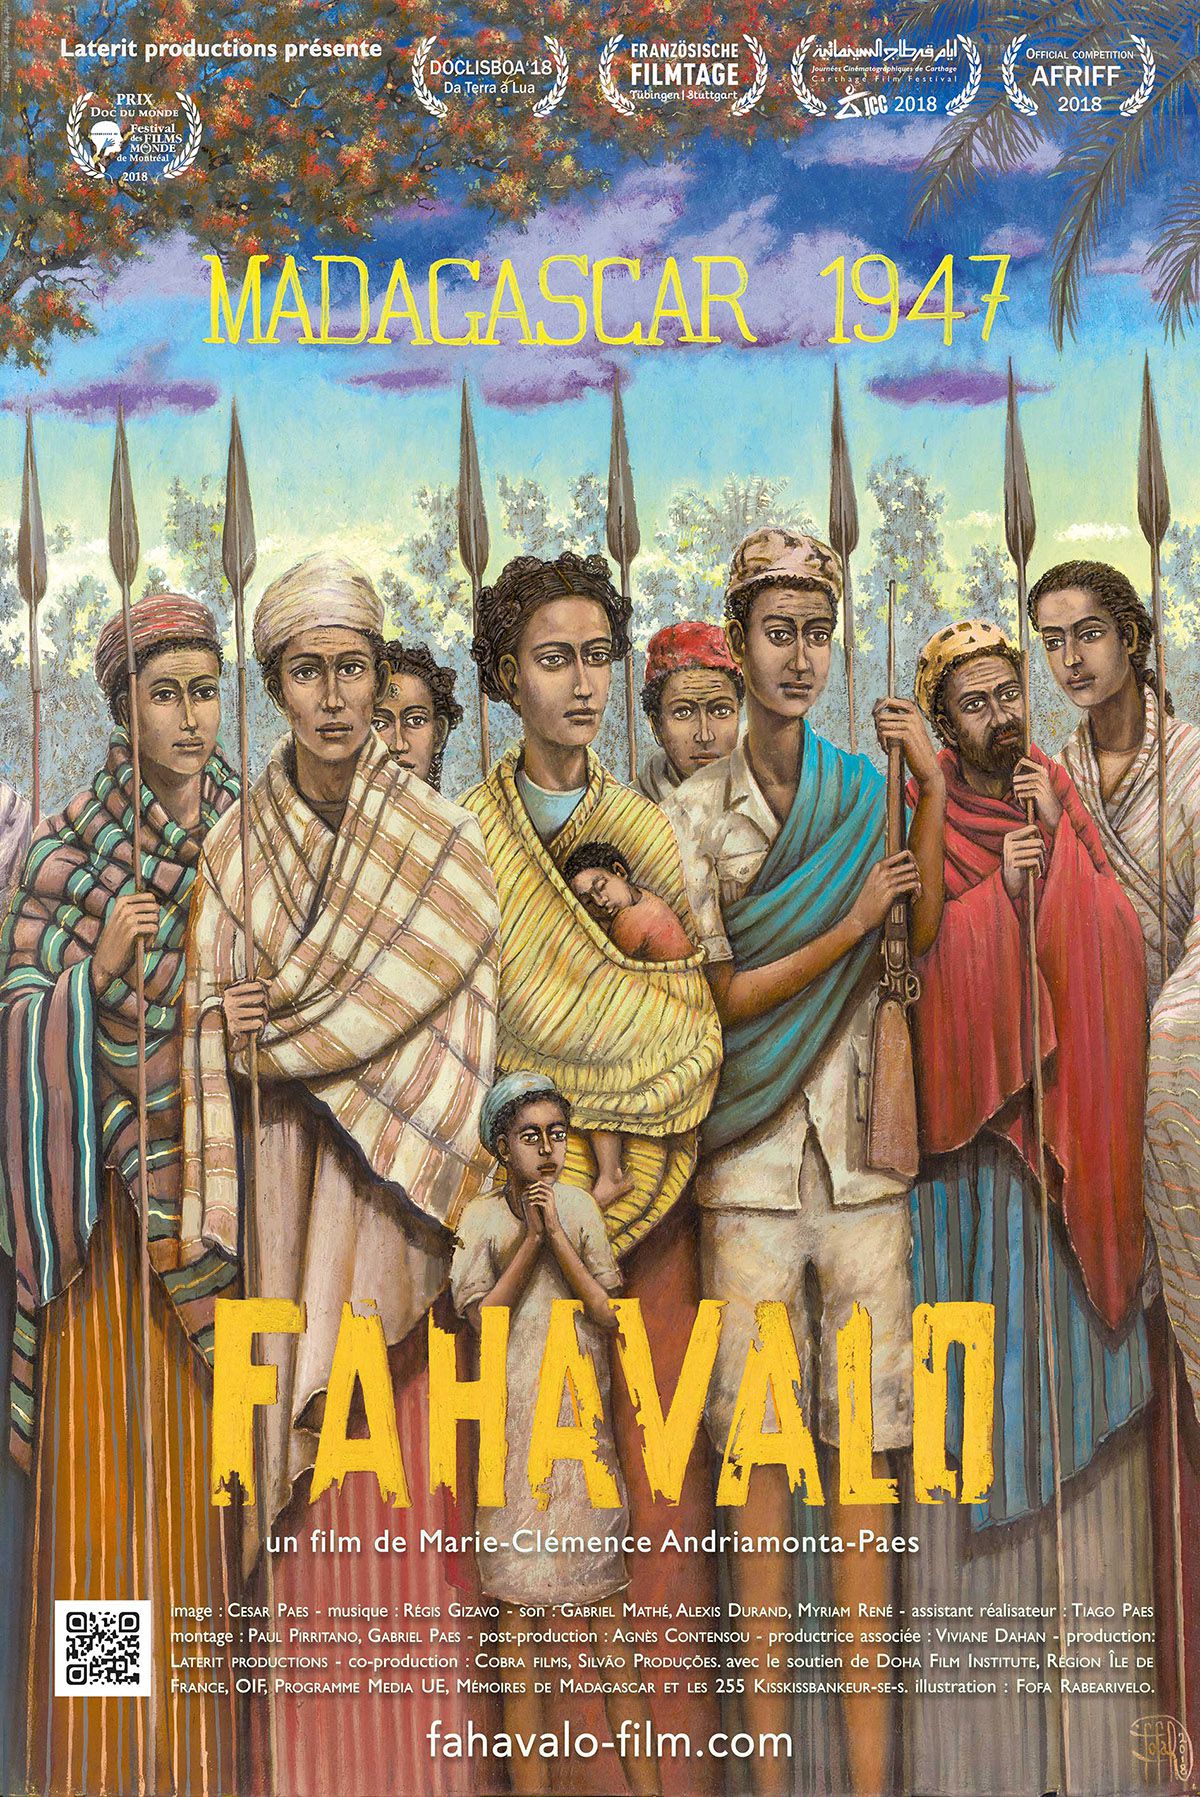 Fahavalo, Madagascar 1947 - Documentaire (2019)